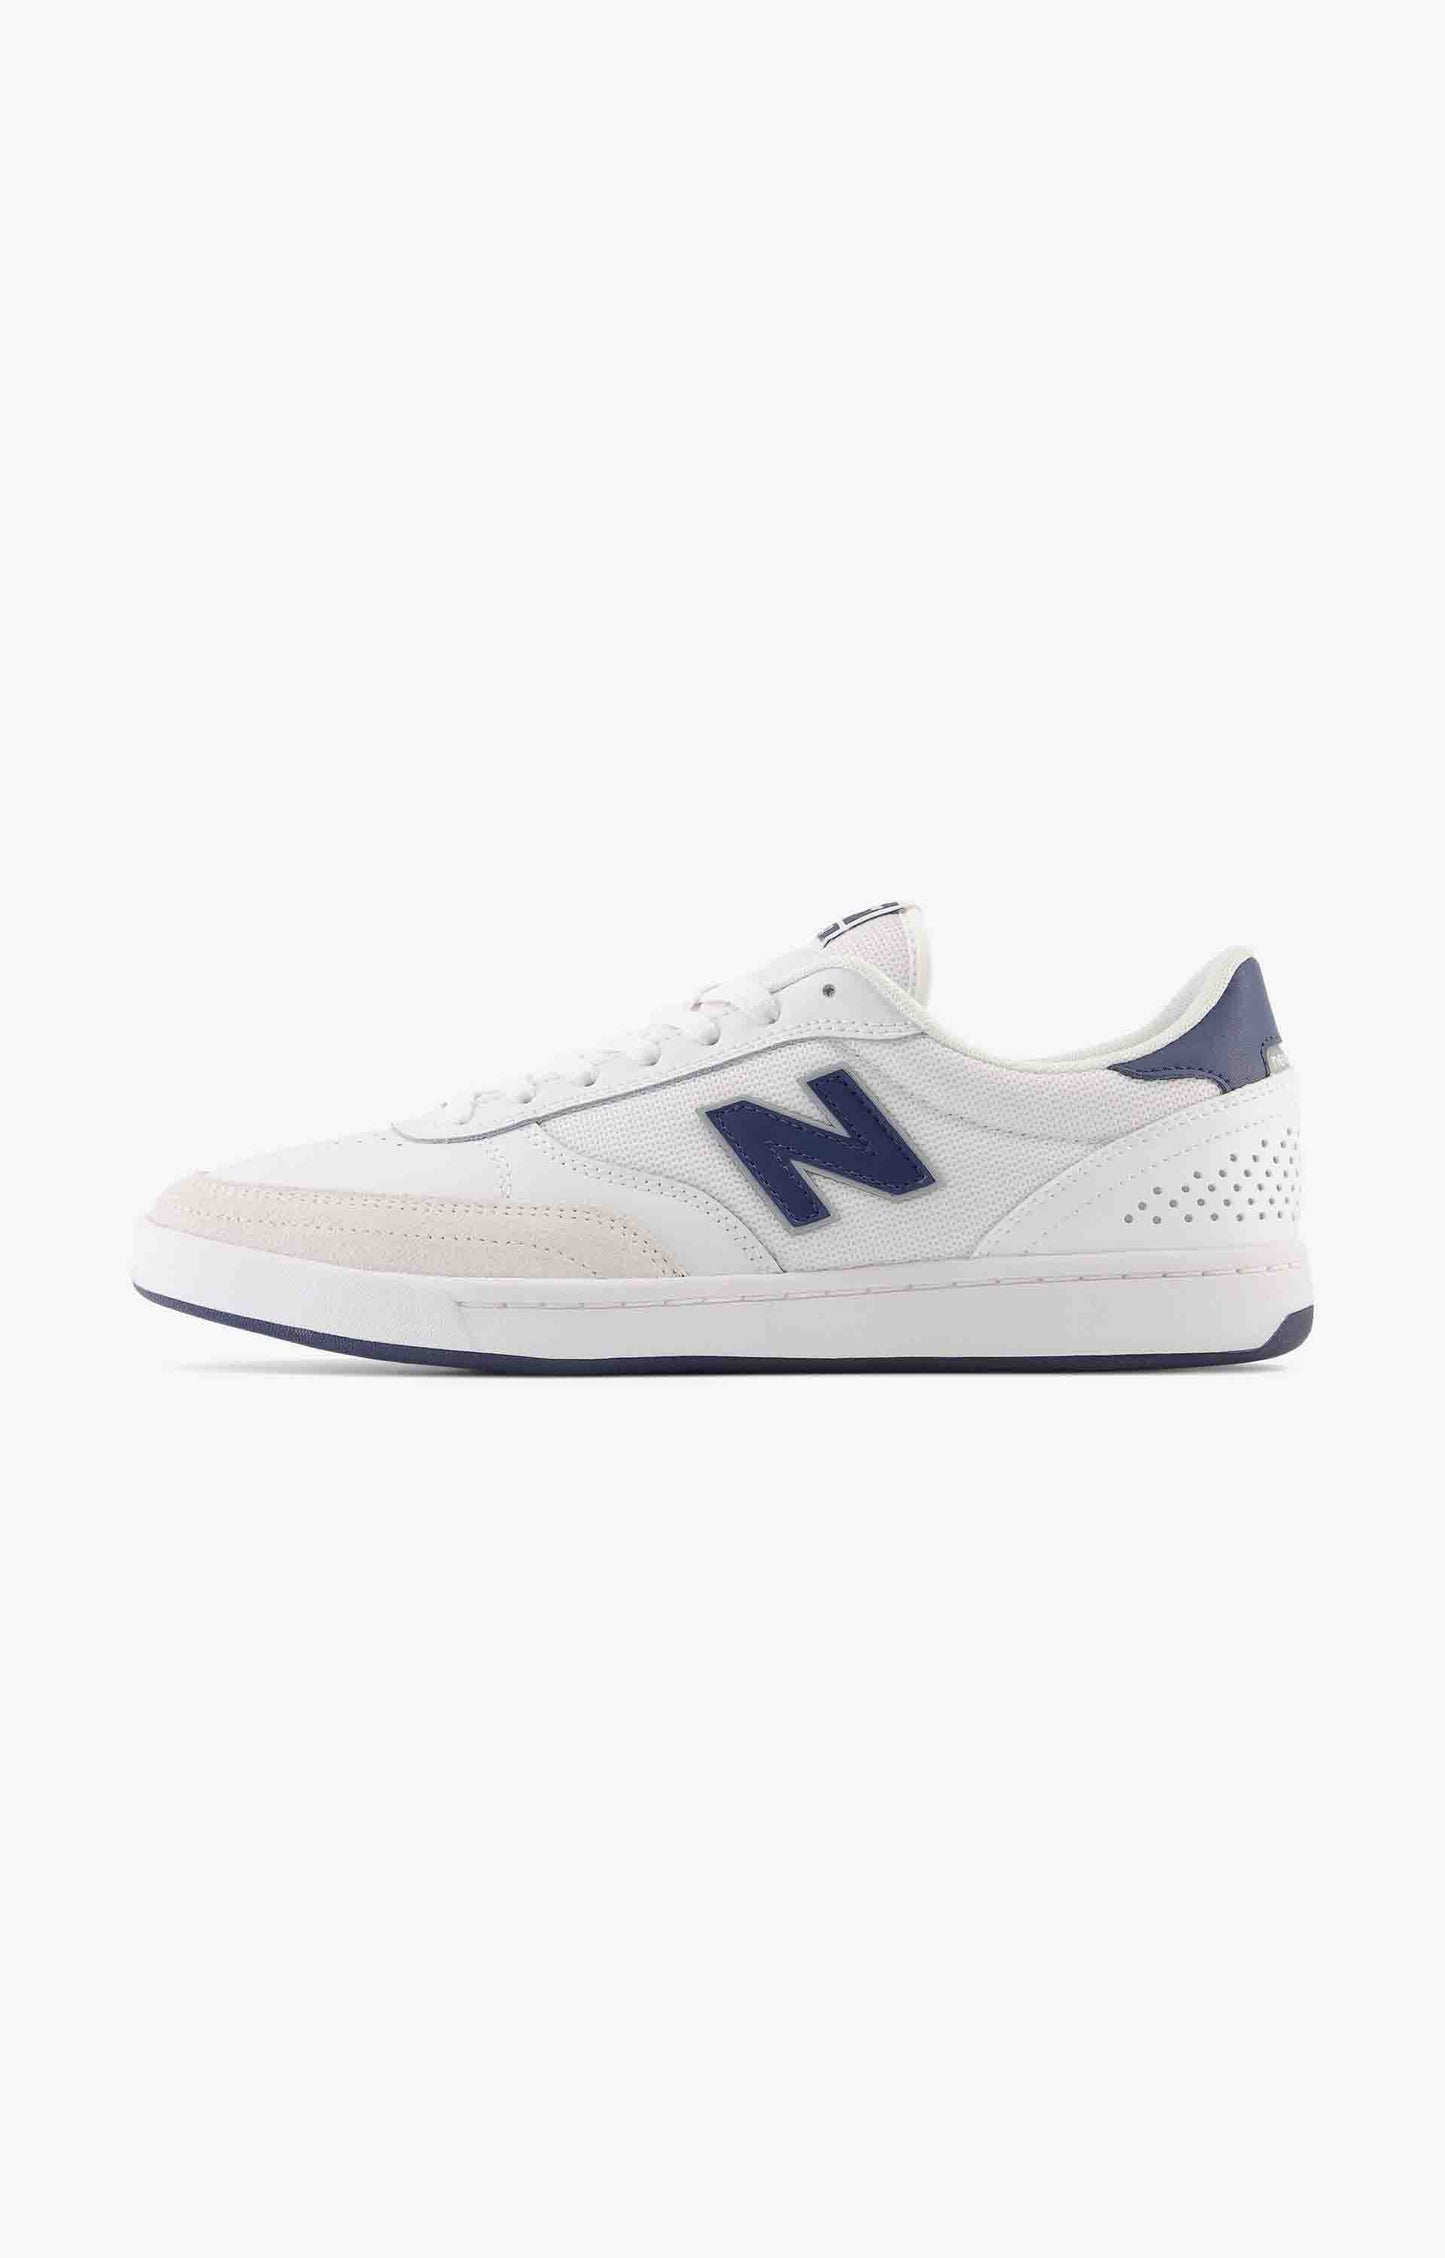 New Balance Numeric NM440ZTS Shoe, White/Navy